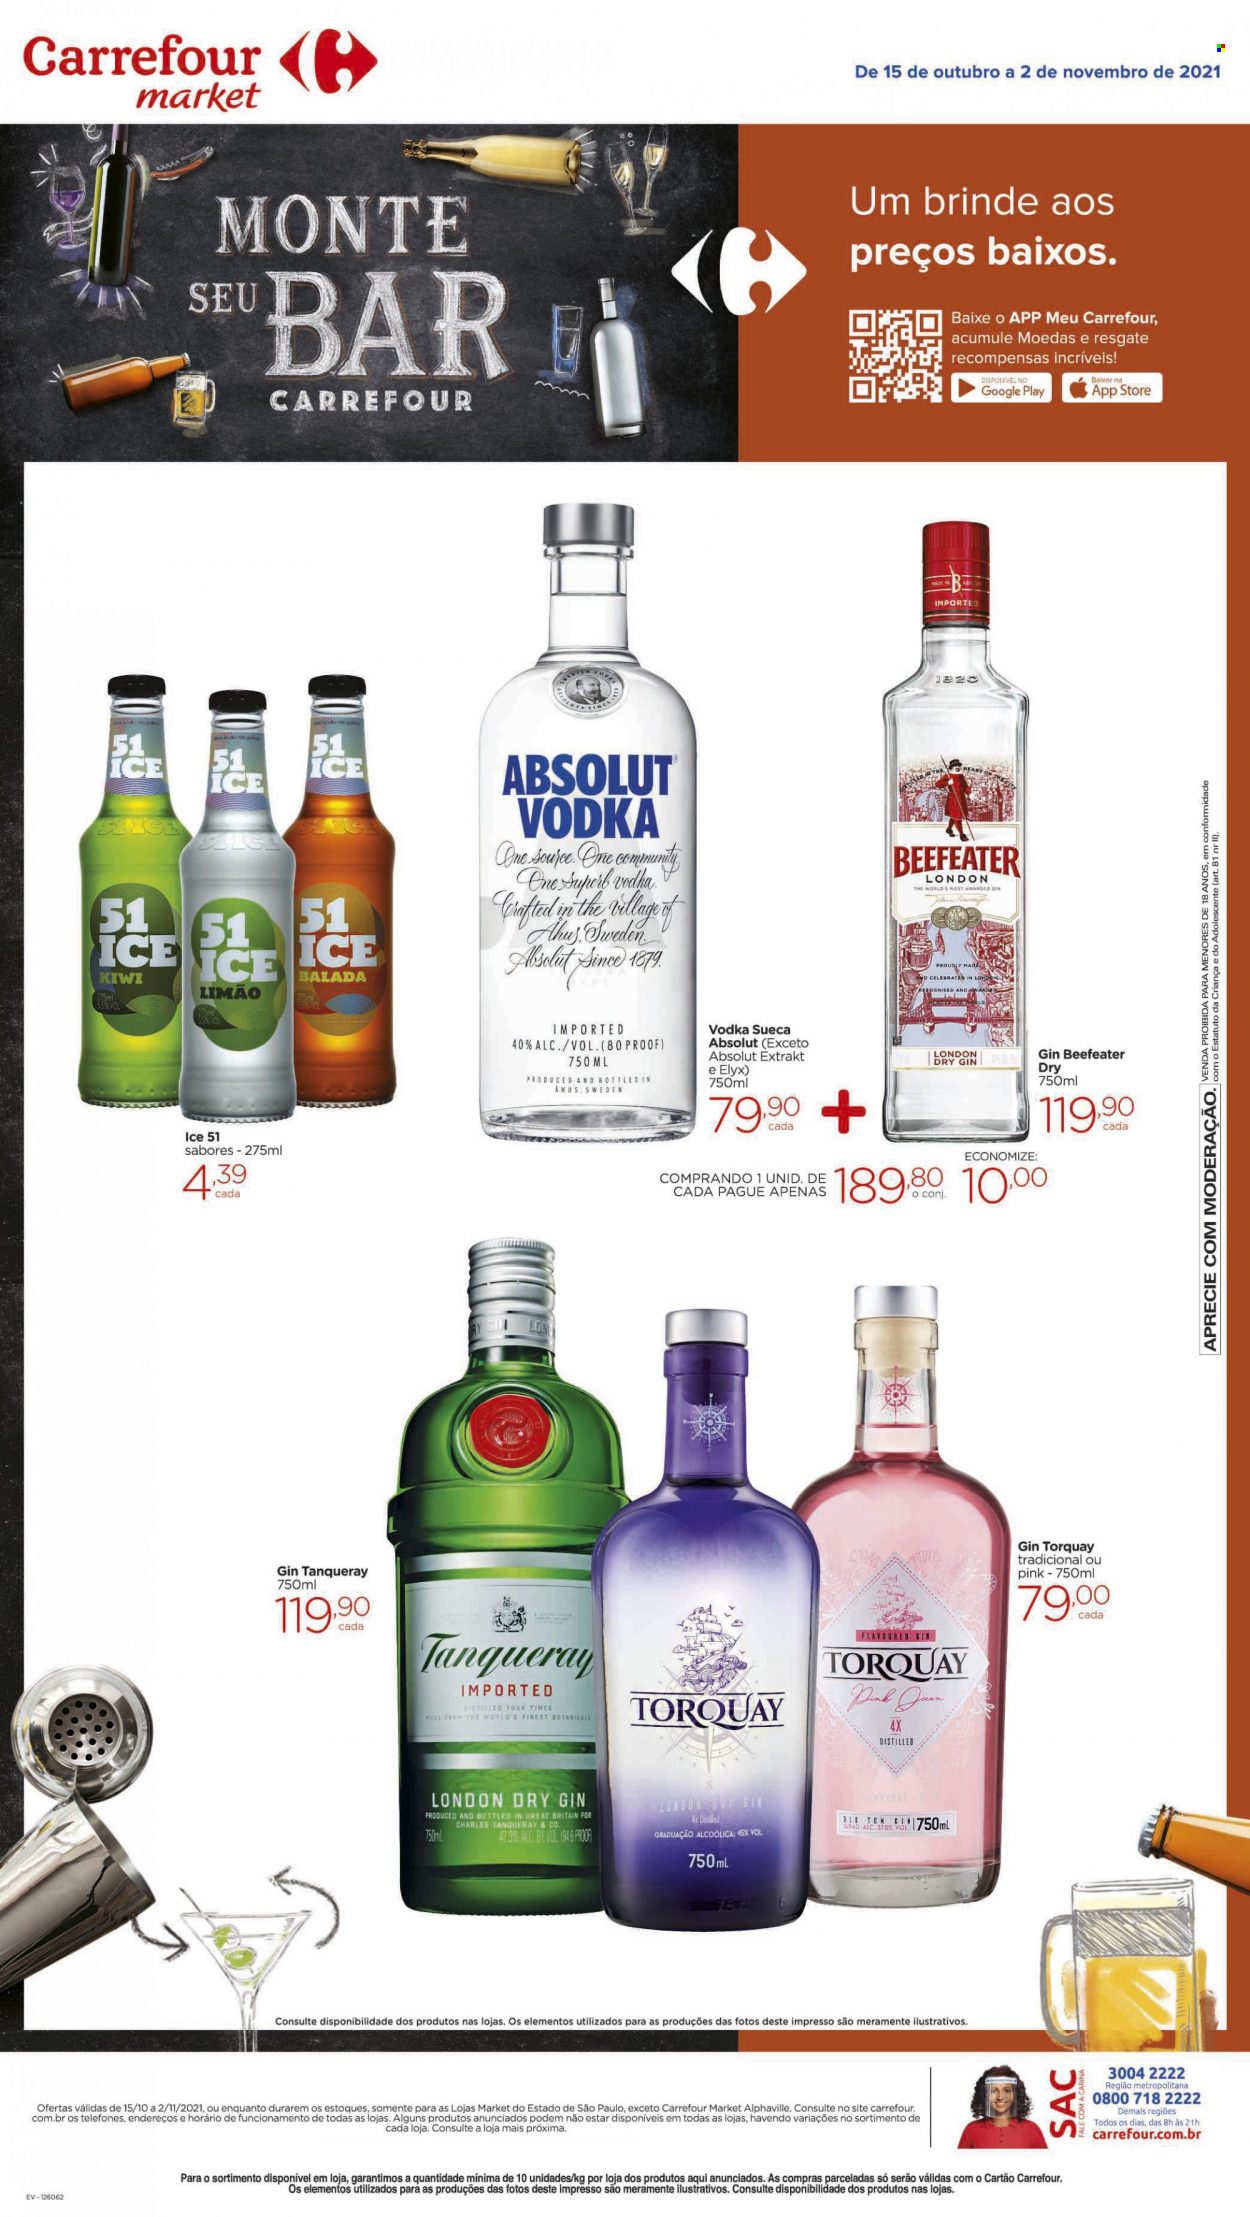 thumbnail - Folheto Carrefour Market - 15/10/2021 - 02/11/2021 - Produtos em promoção - kiwi, limão, Absolut Vodka, Beefeater, gin, vodka, London Dry Gin, Tanqueray. Página 2.